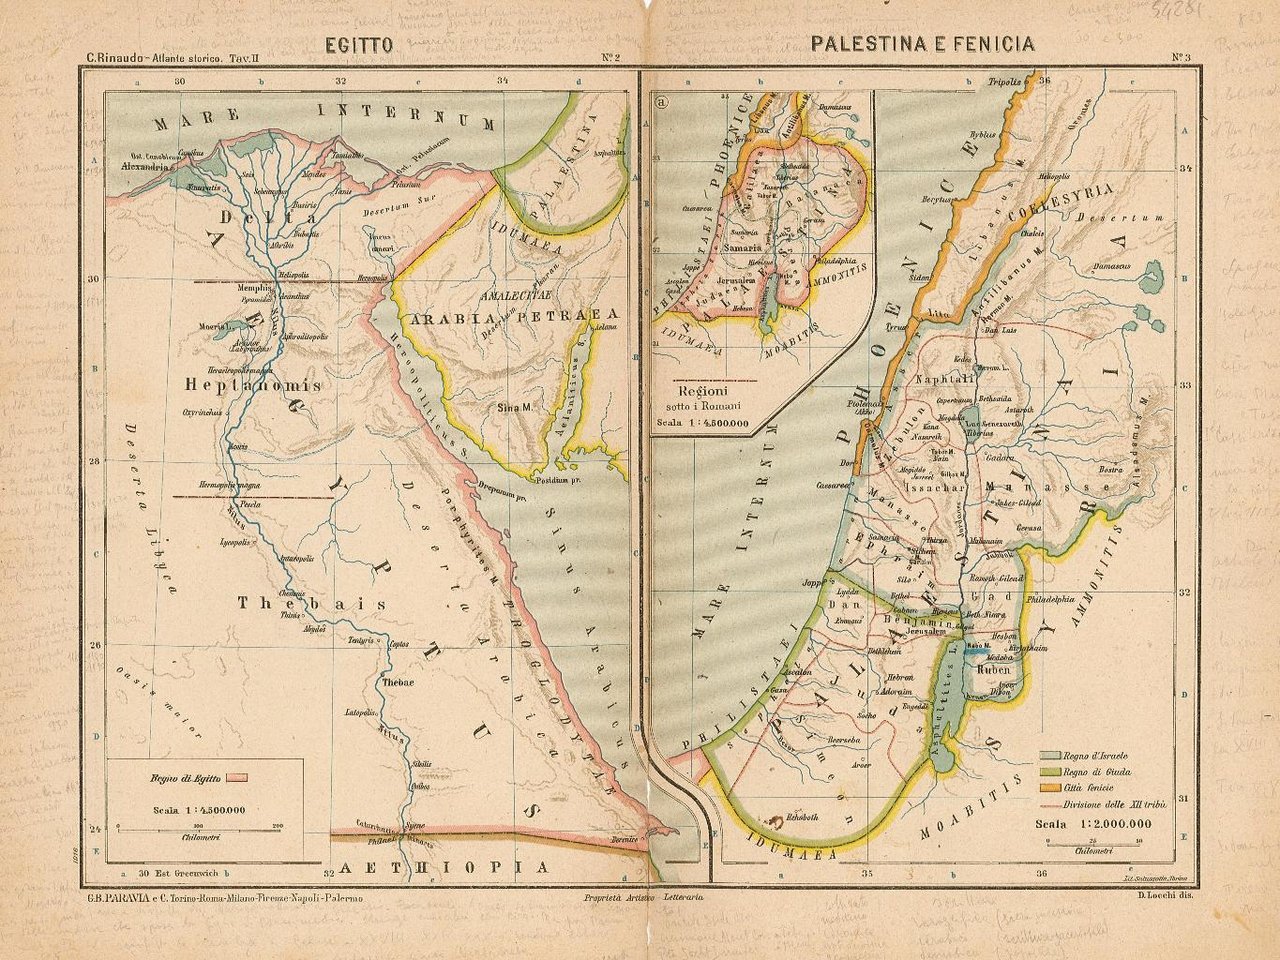 Egitto - Palestina e Fenicia